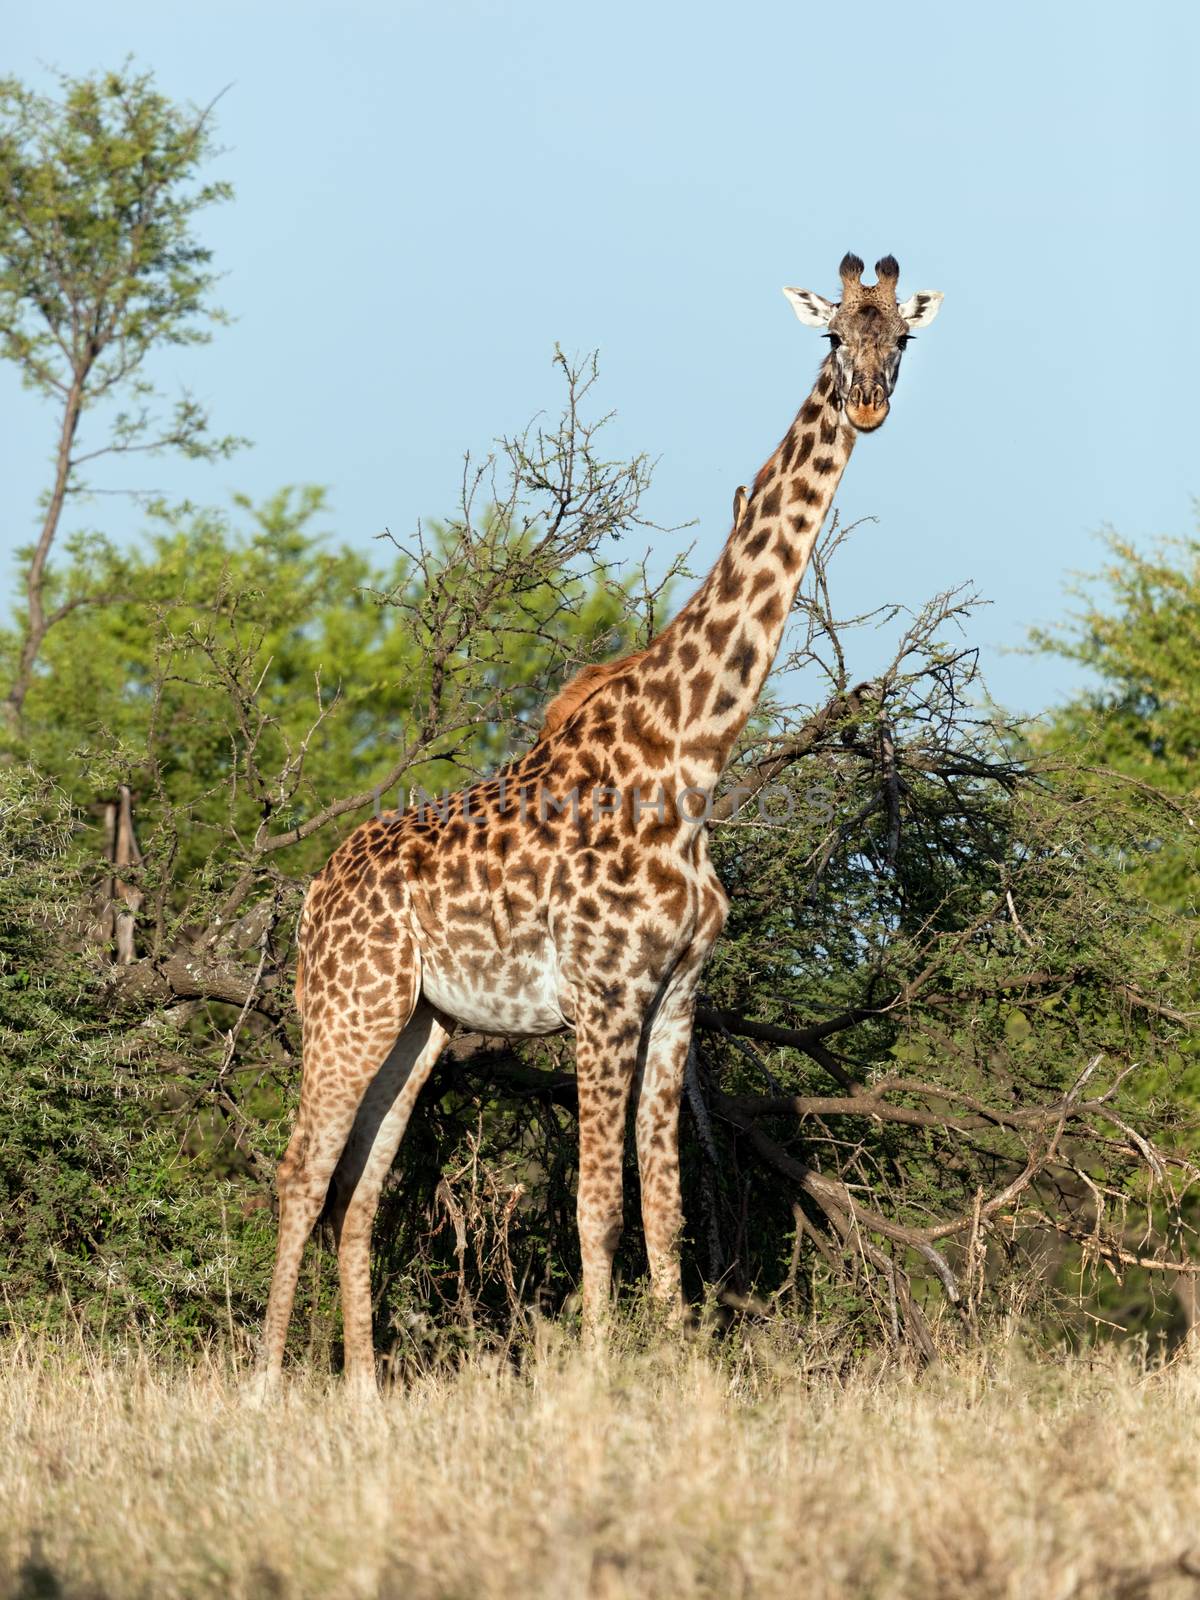 Giraffe on savanna, full view. Safari in Serengeti, Tanzania, Africa